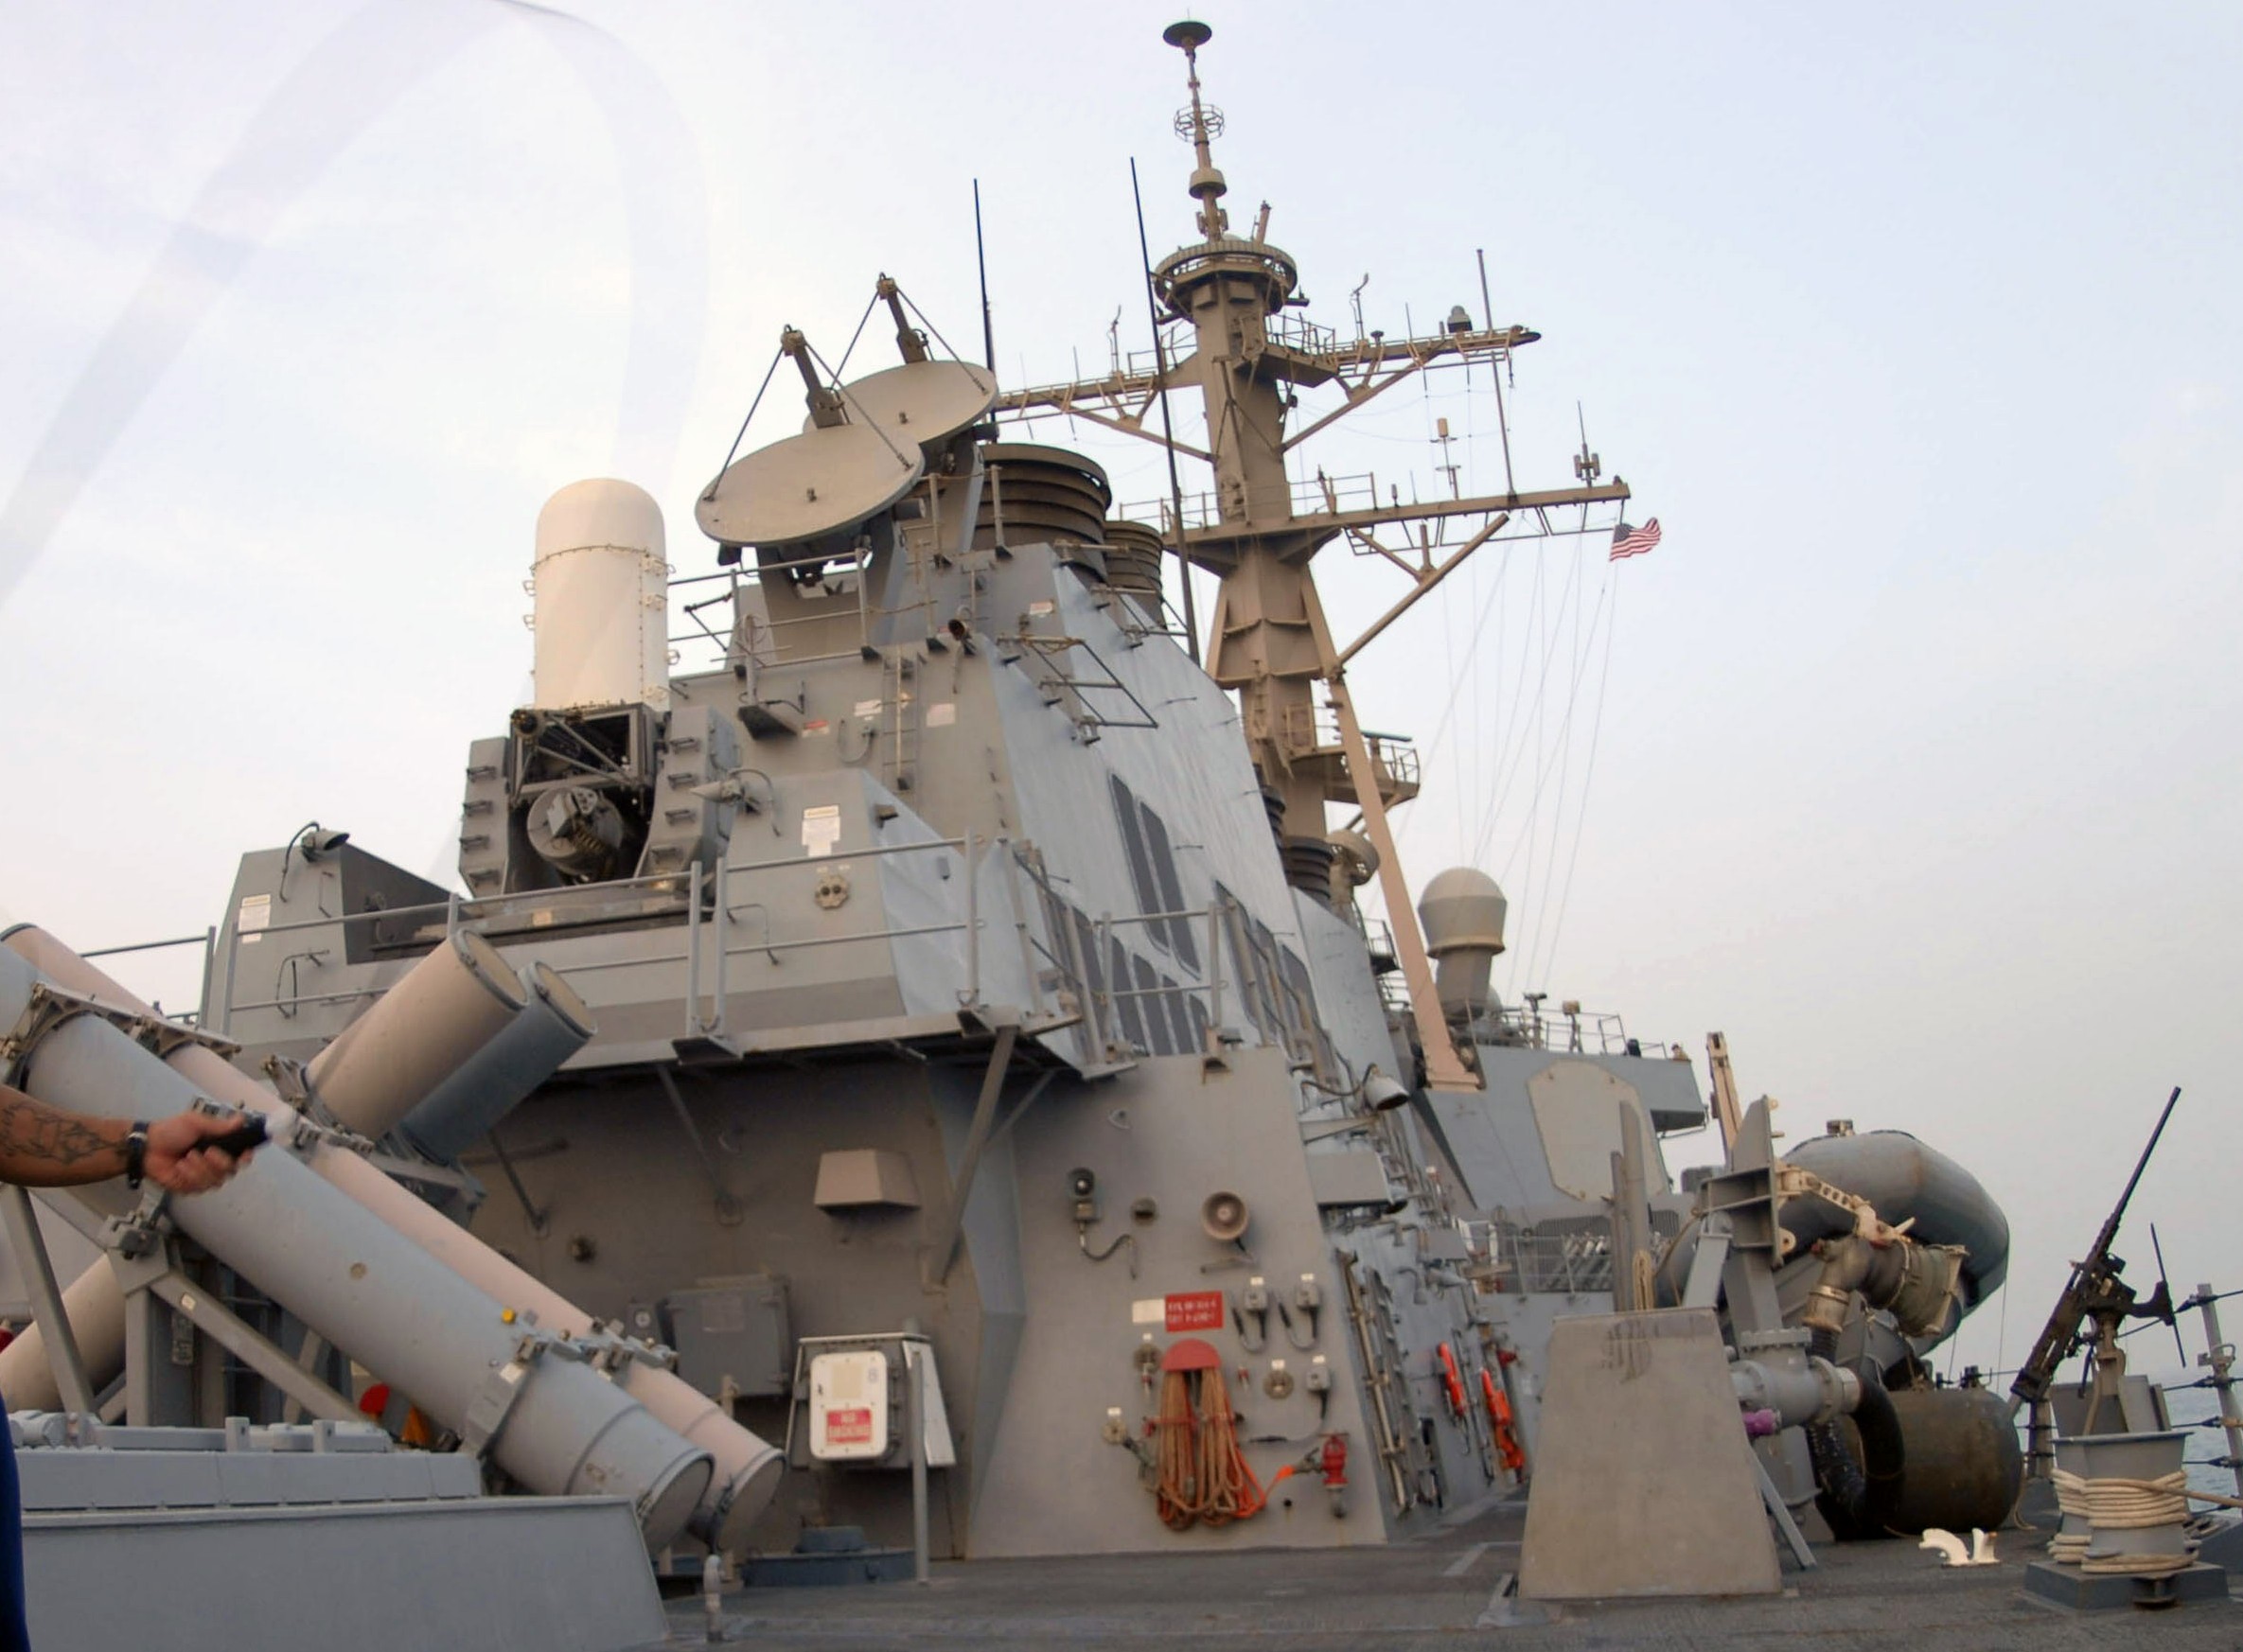 ddg-77 uss o'kane guided missile destroyer arleigh burke class navy aegis 50 persian gulf